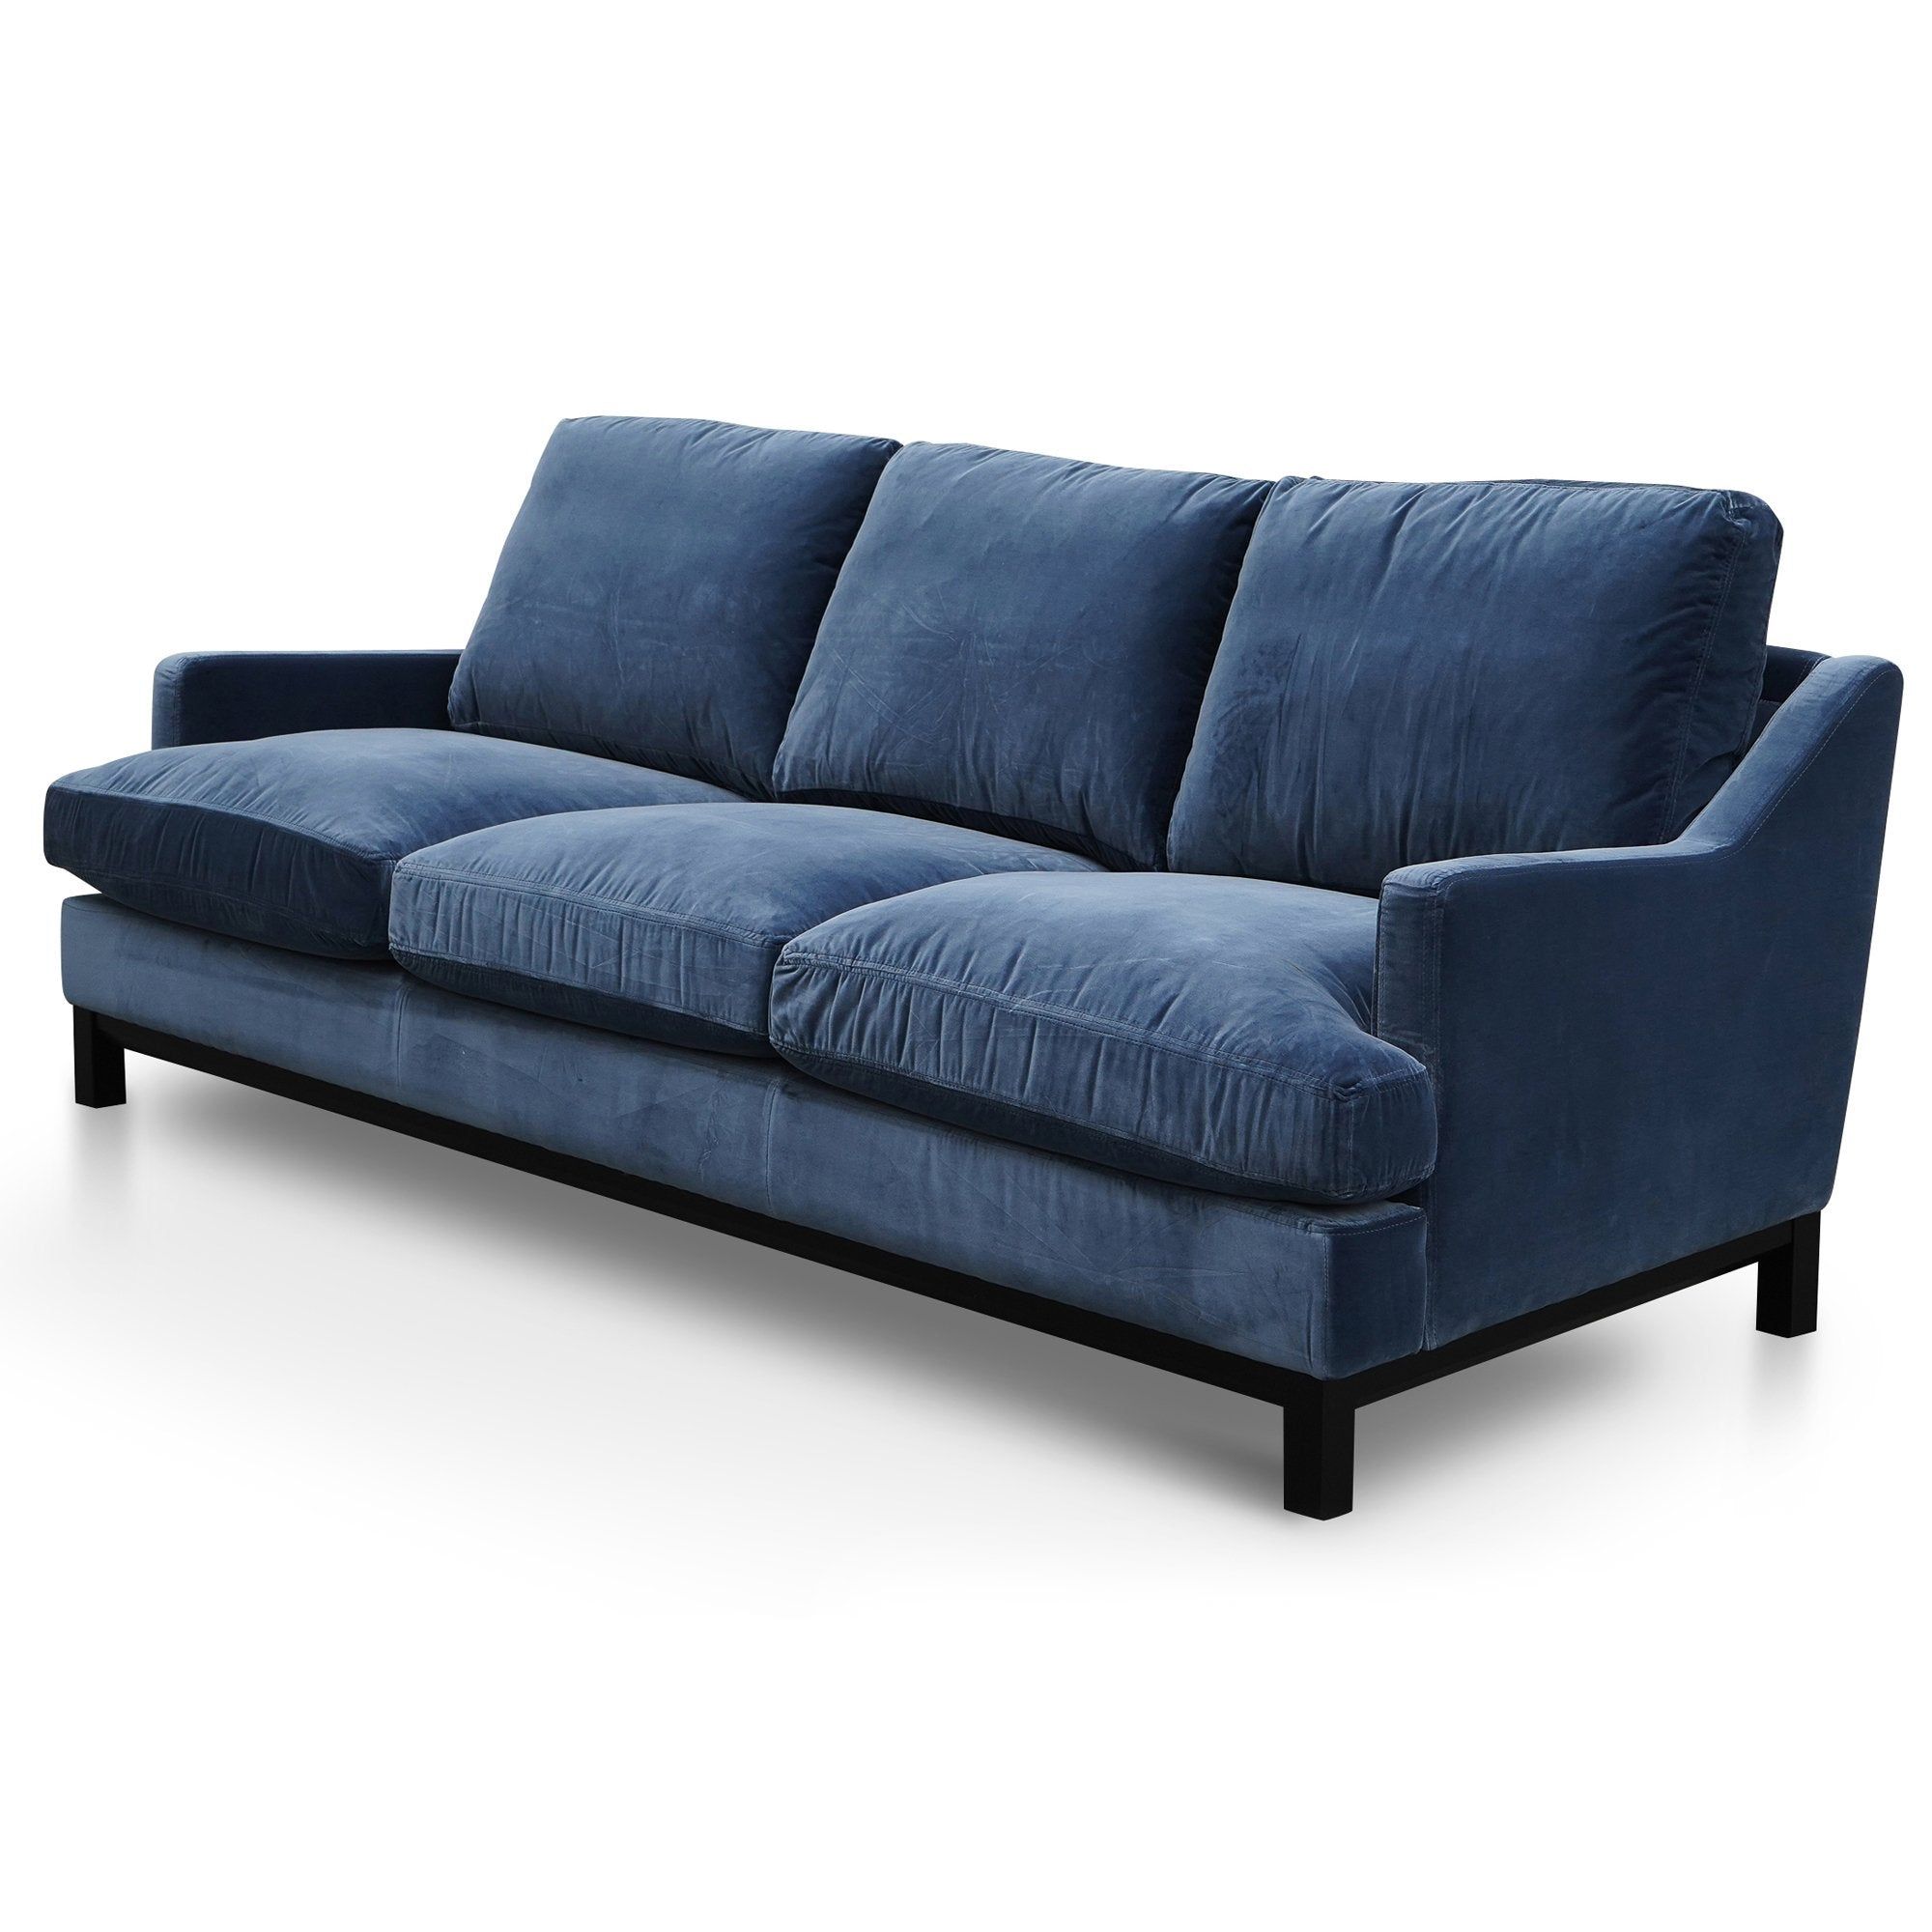 Hensley 3 Seater Fabric Sofa – Midnight Navy Velvet | Interior Secrets Within Navy Linen Coil Sofas (View 9 of 20)